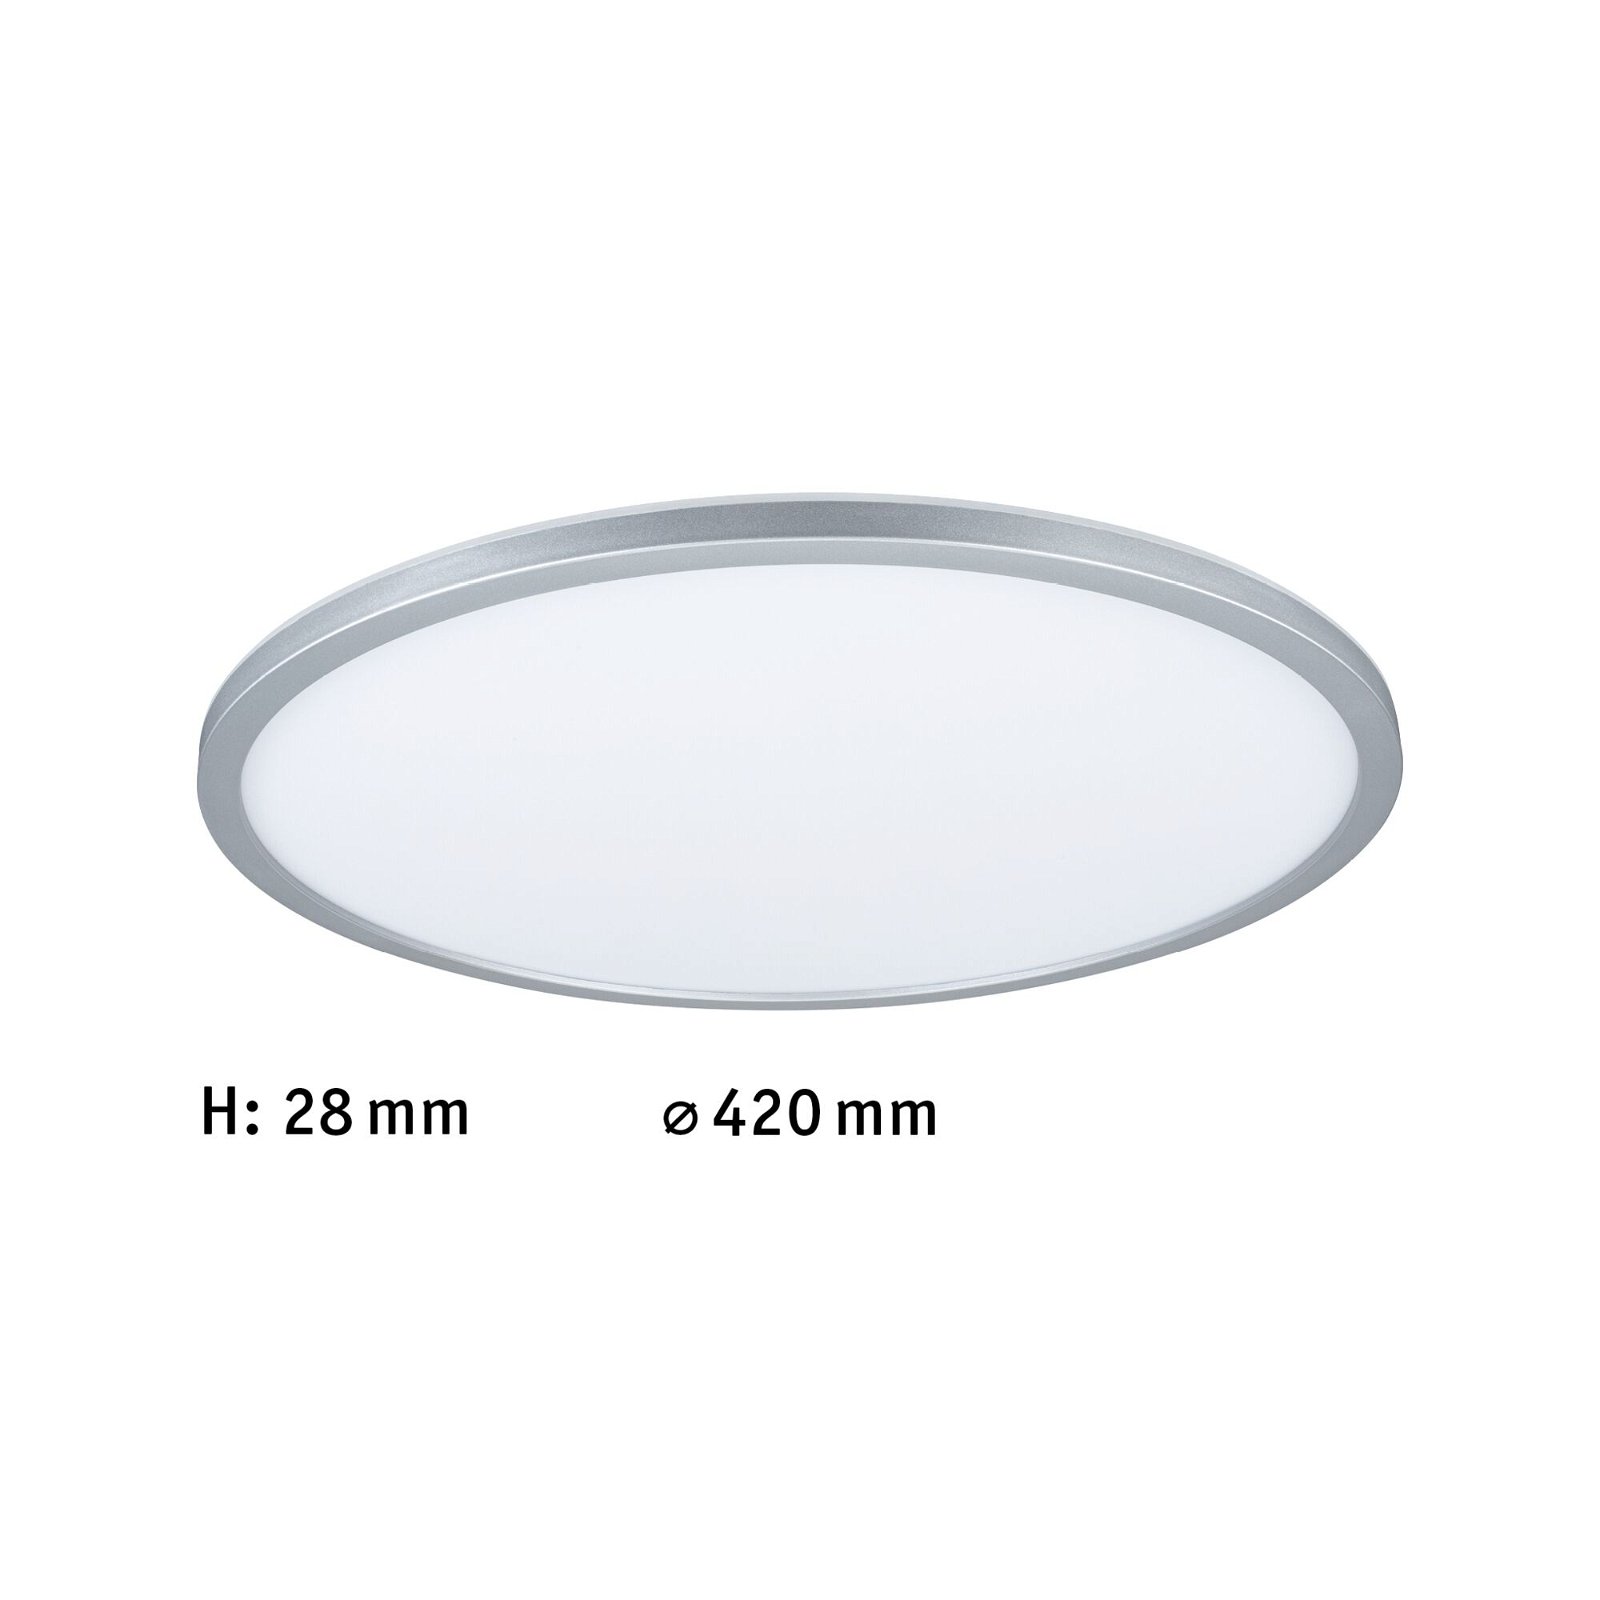 LED Panel Atria Shine Backlight round 420mm 20W 2200lm RGBW Chrome matt dimmable